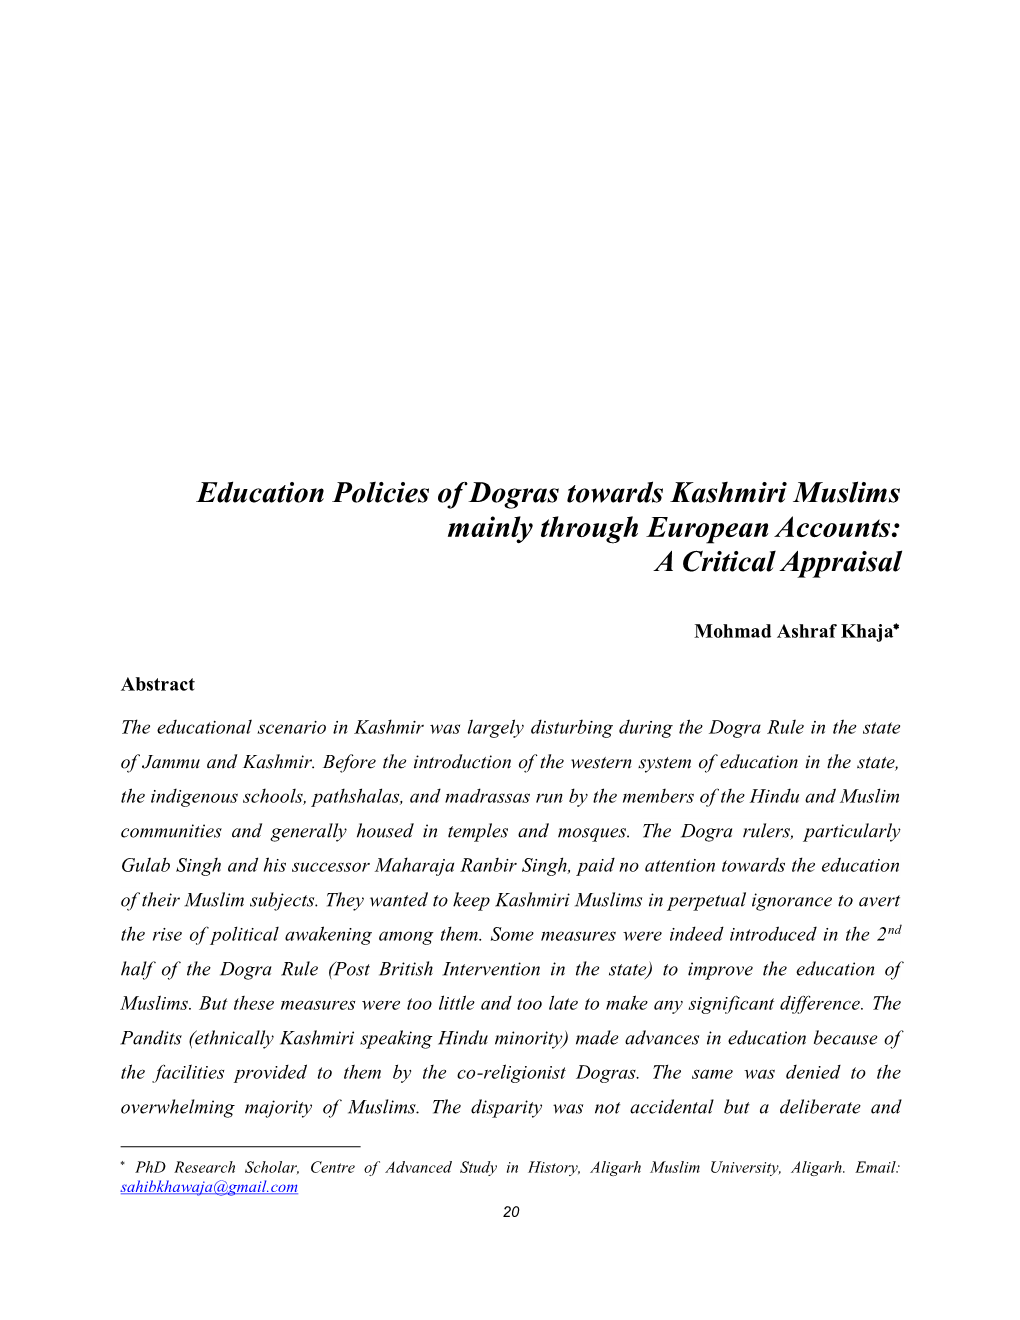 Education Policies of Dogras Towards Kashmiri Muslims Mainly Through European Accounts: a Critical Appraisal